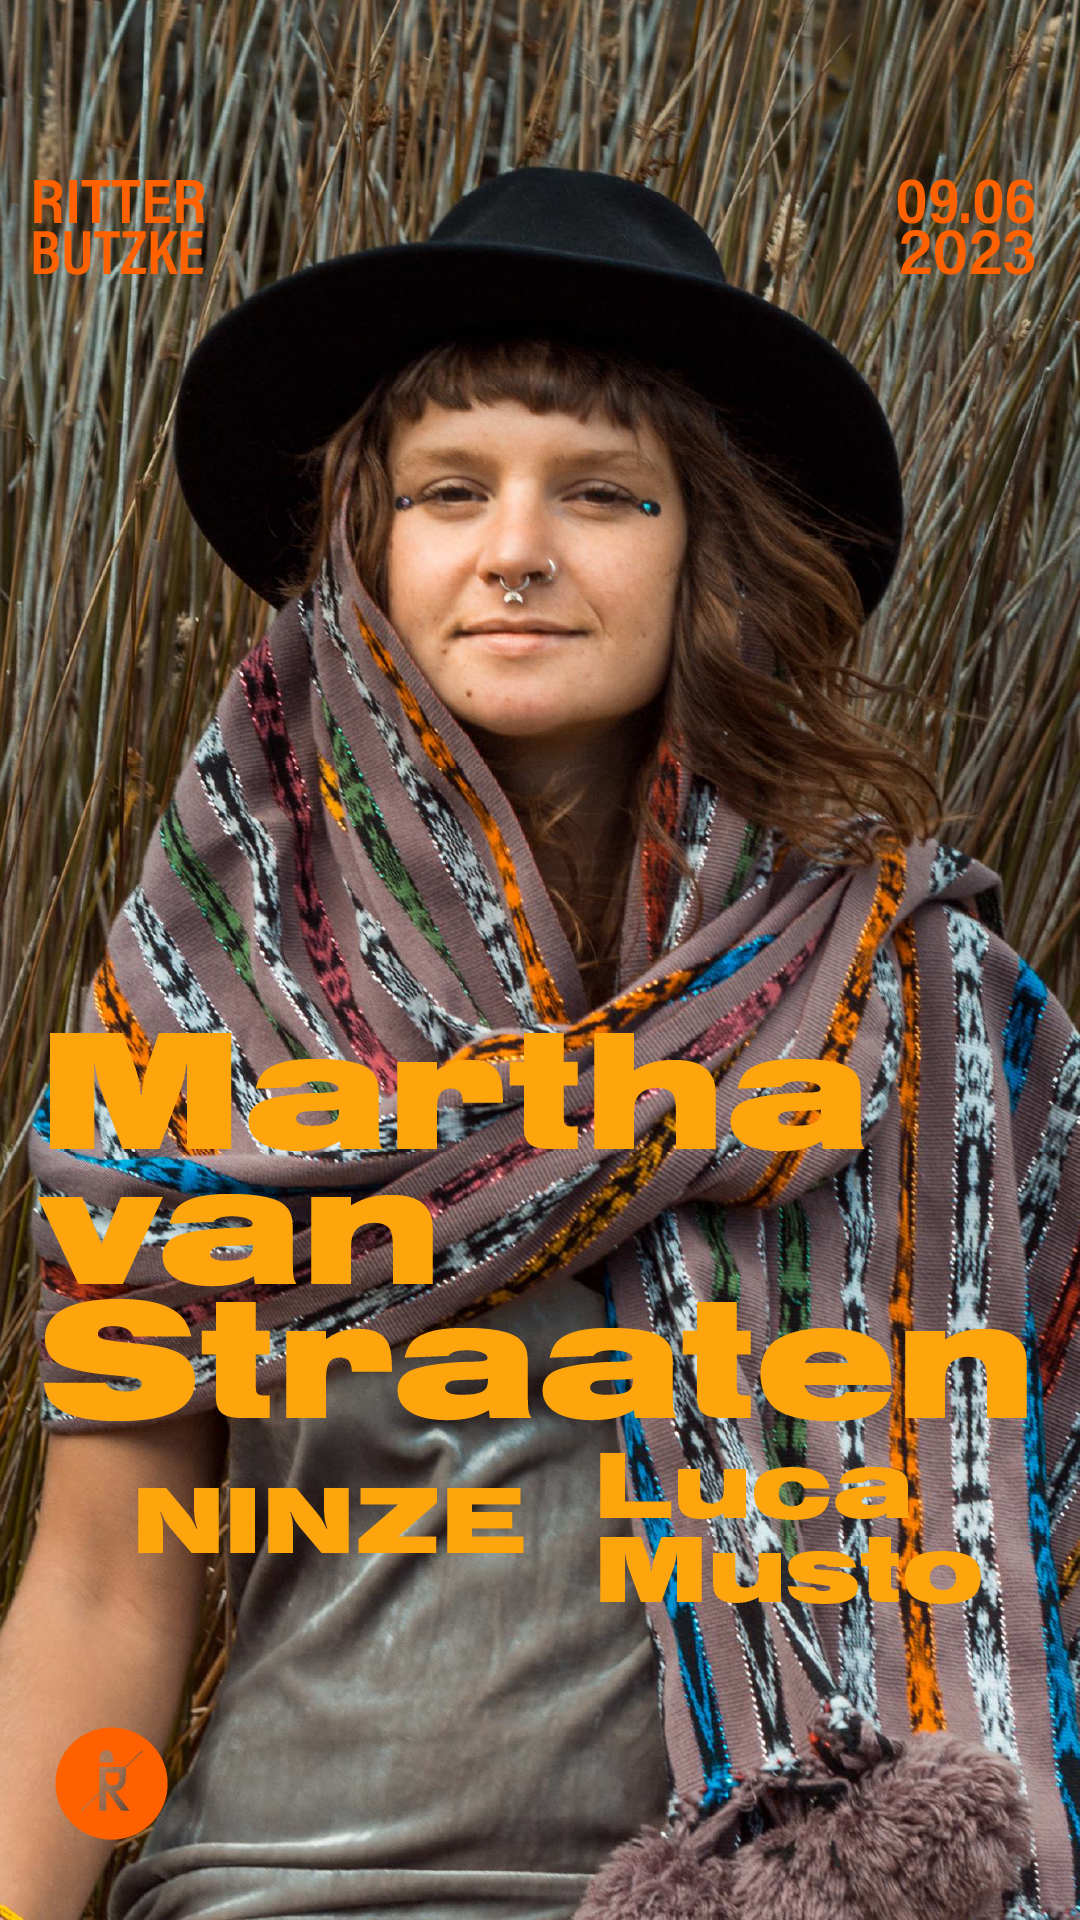 Martha van Straaten - フライヤー裏